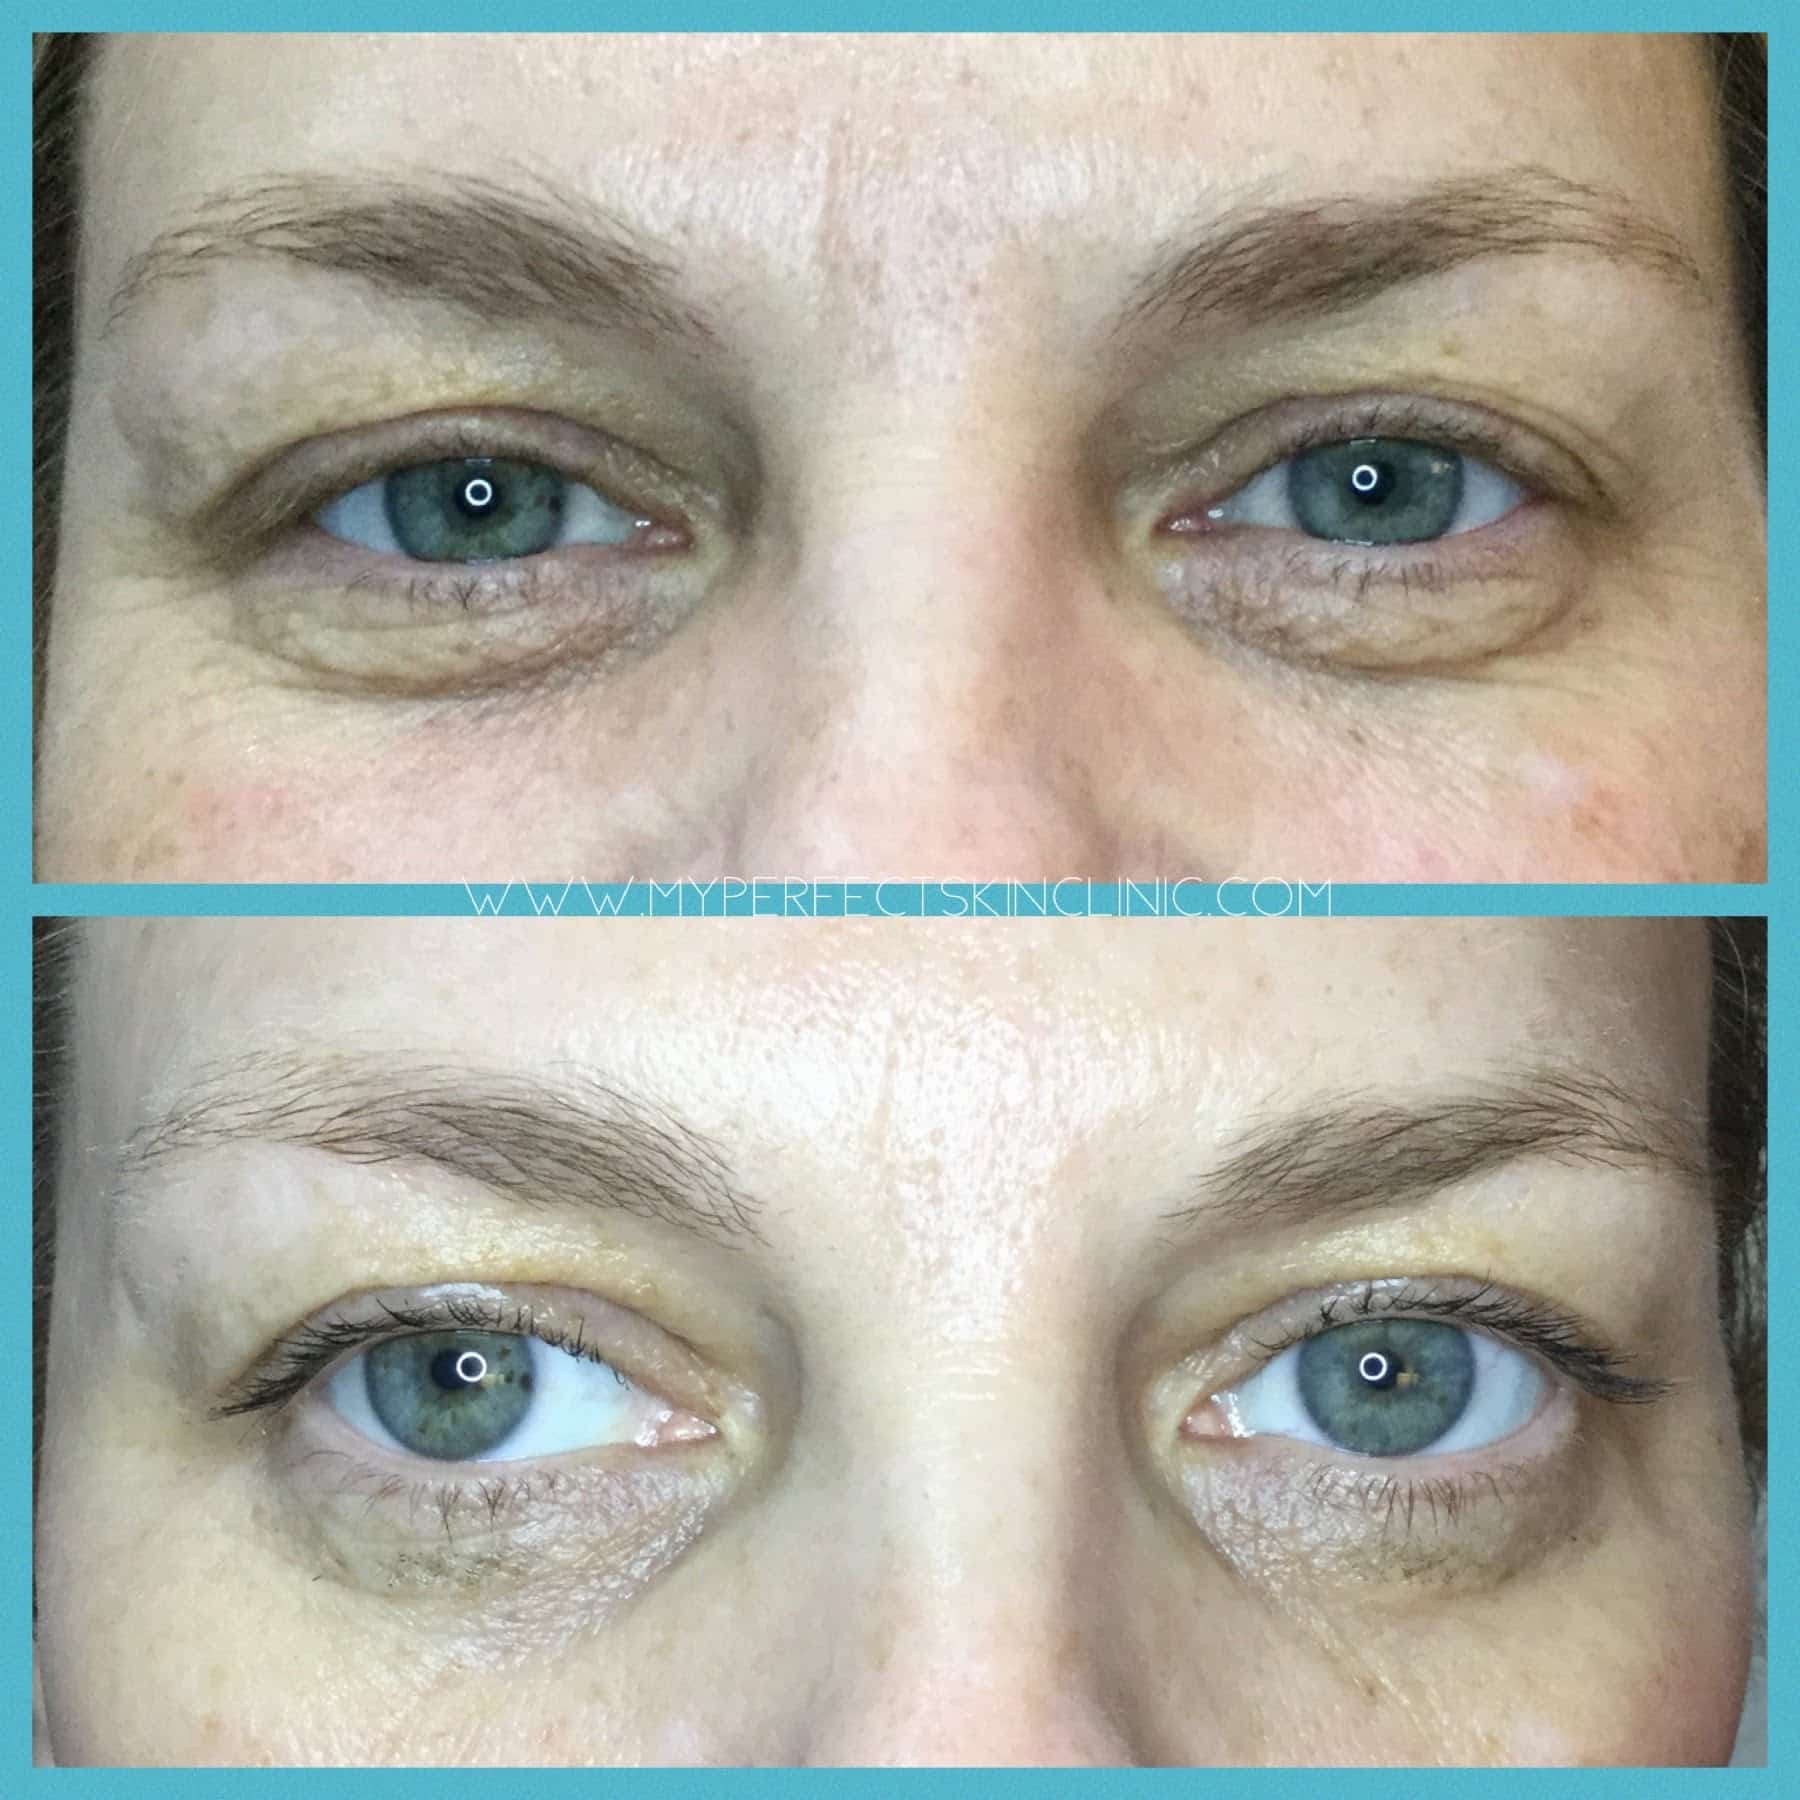 Eyelid tightening/under-eye treatment and excess upper eyelid skin